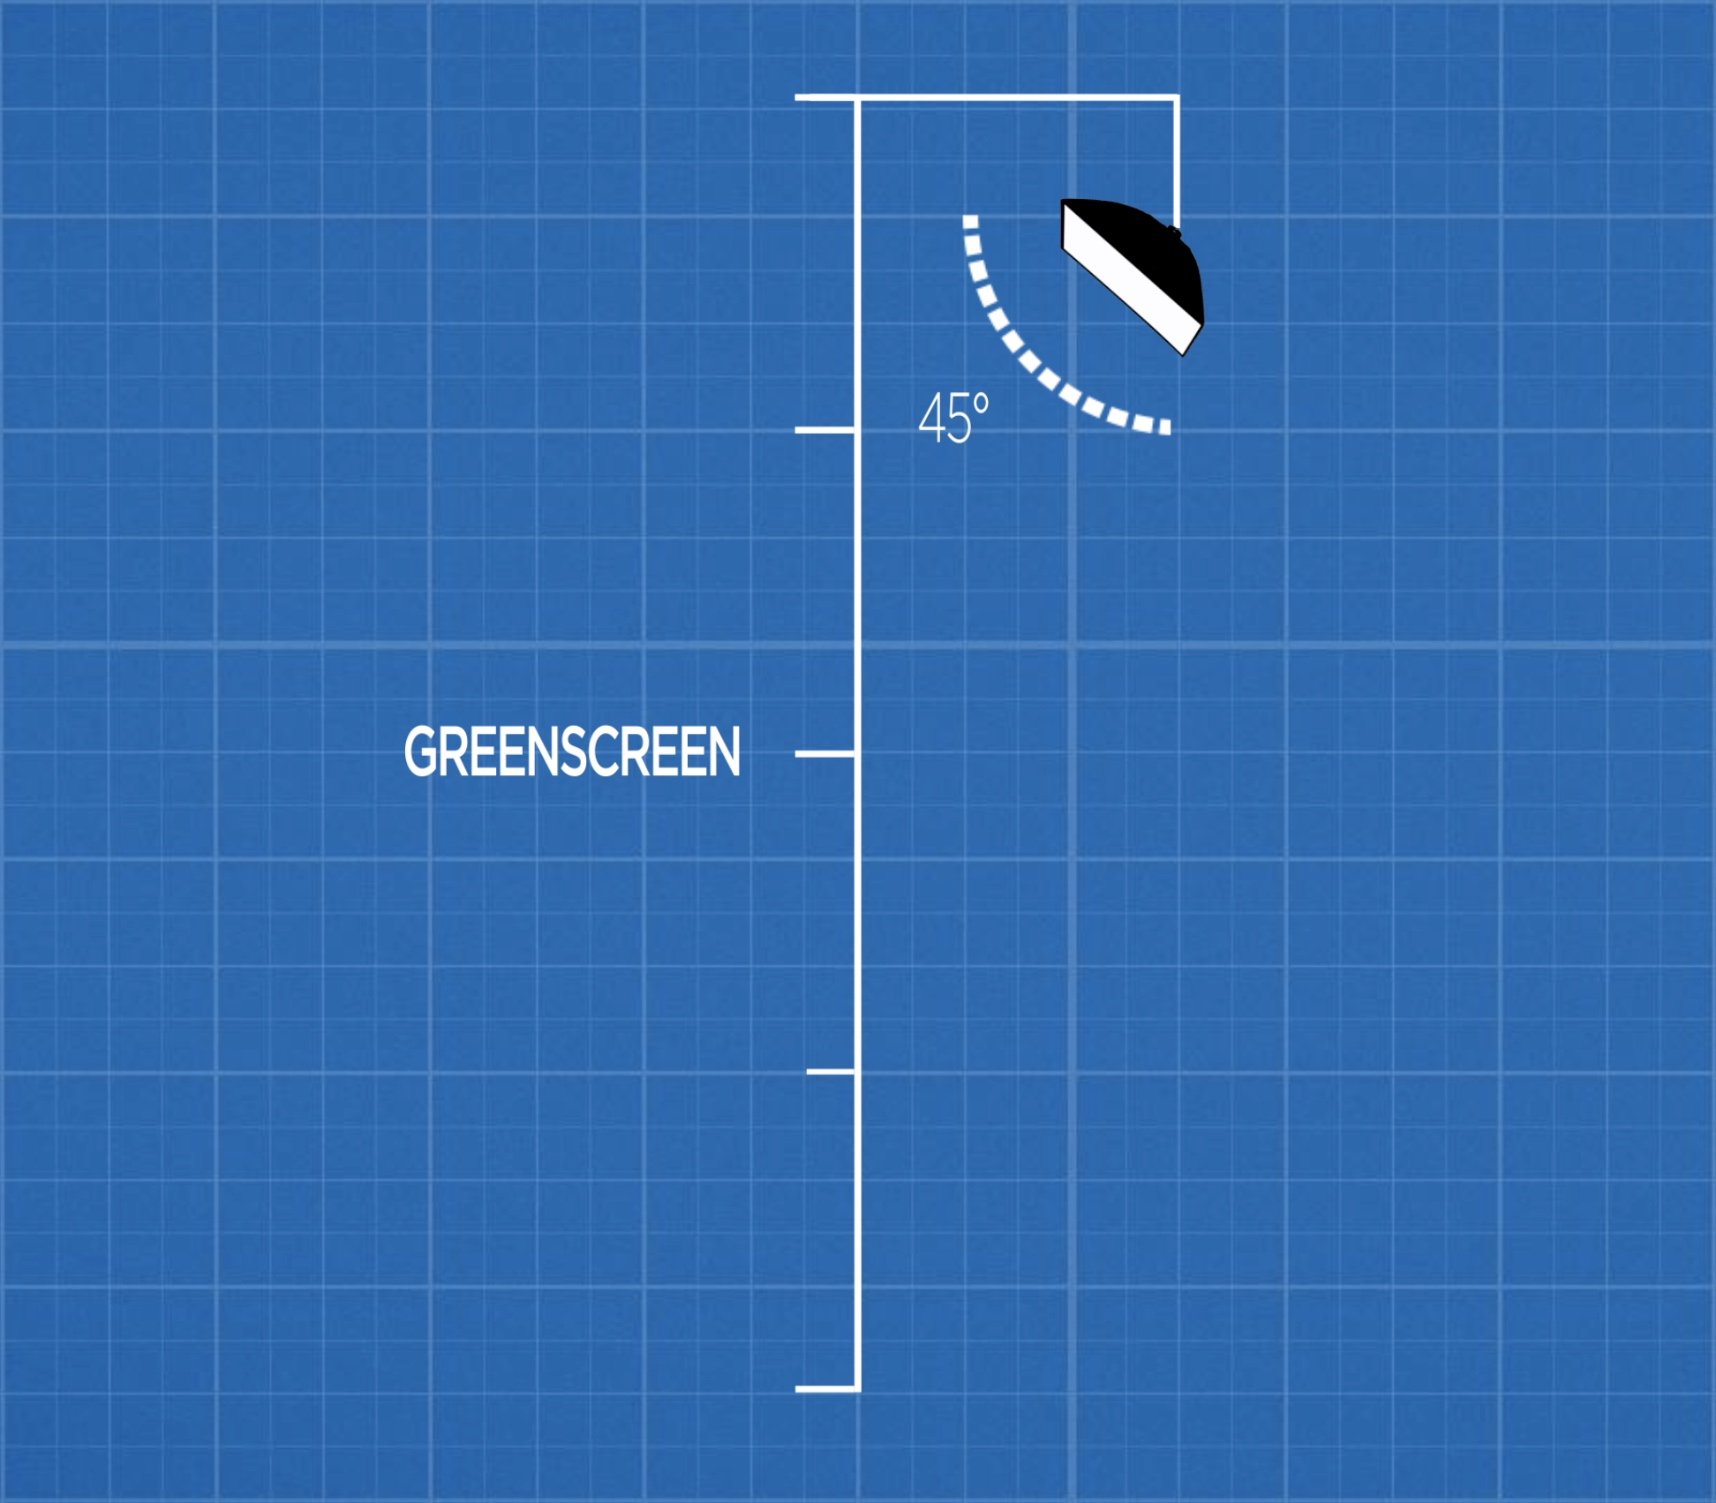 Greenscreen lighting rule of thumb